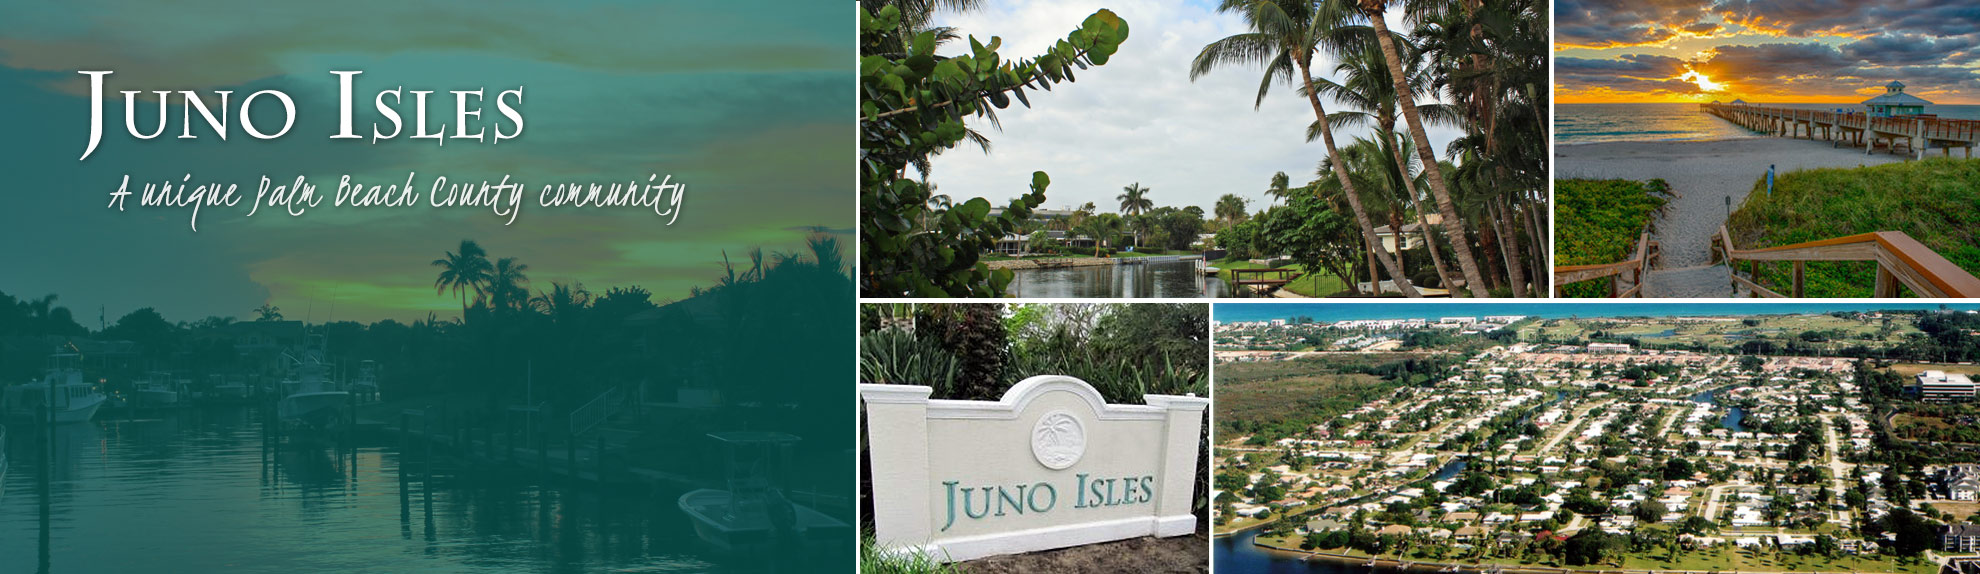 Juno Isles - A Palm Beach County, FL Community